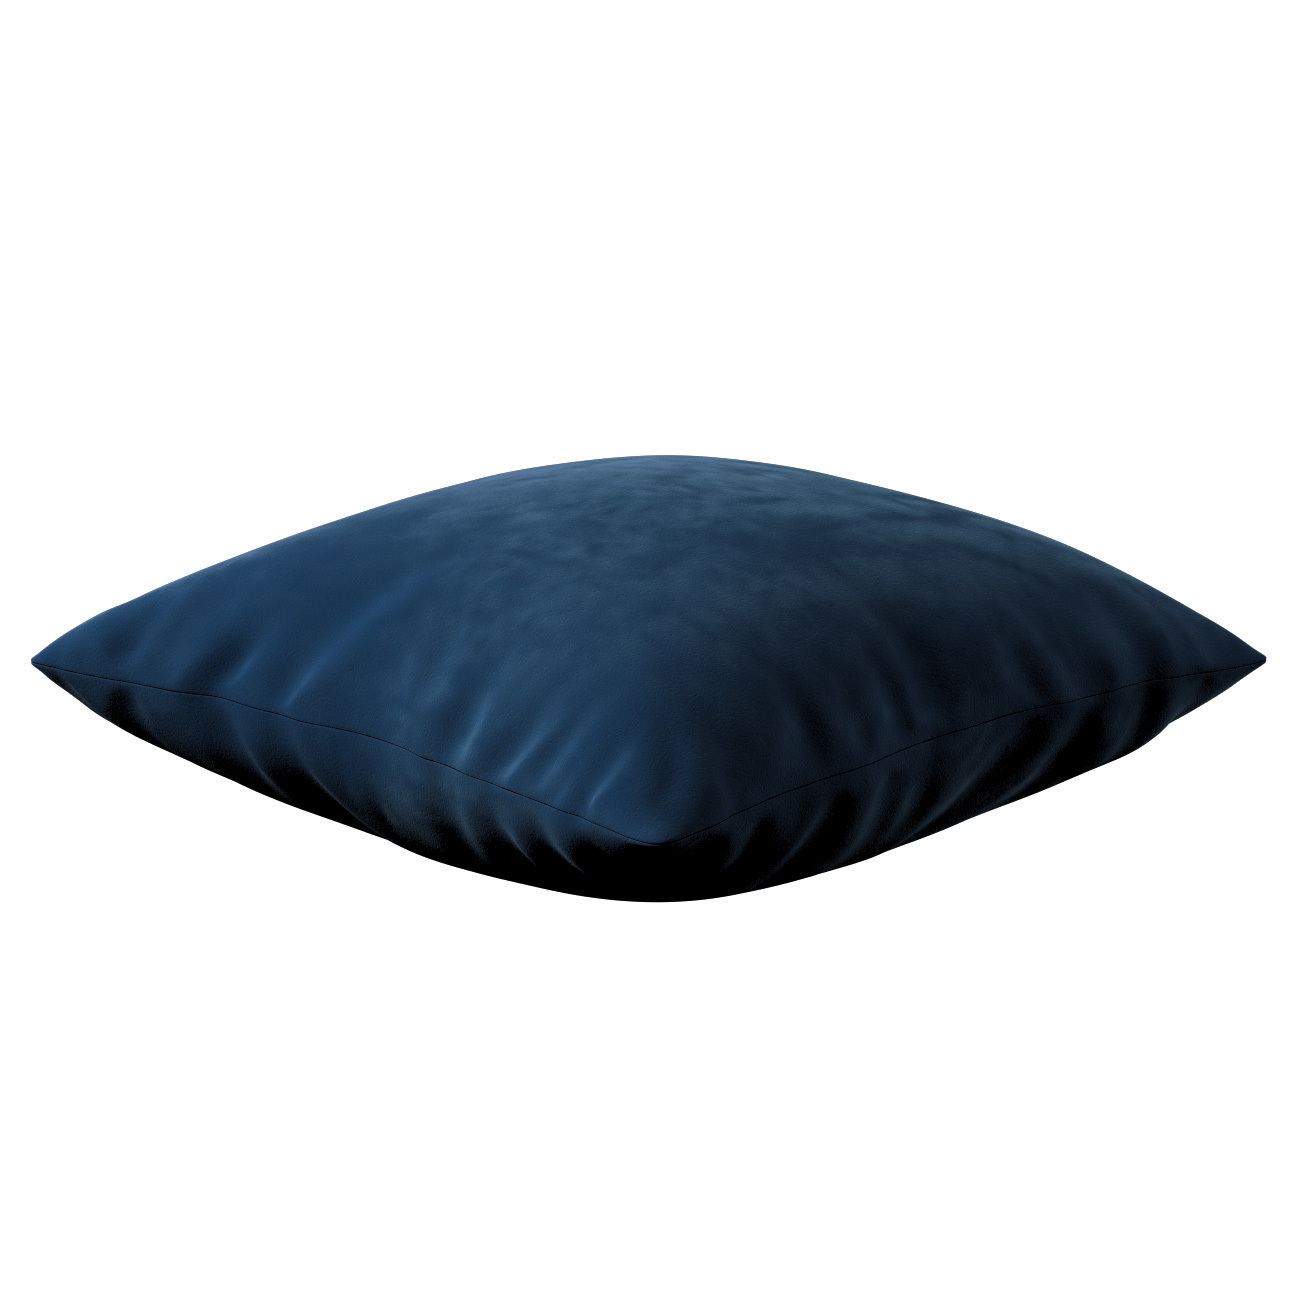 Kissenhülle Kinga, dunkelblau, 60 x 60 cm, Velvet (704-29) günstig online kaufen